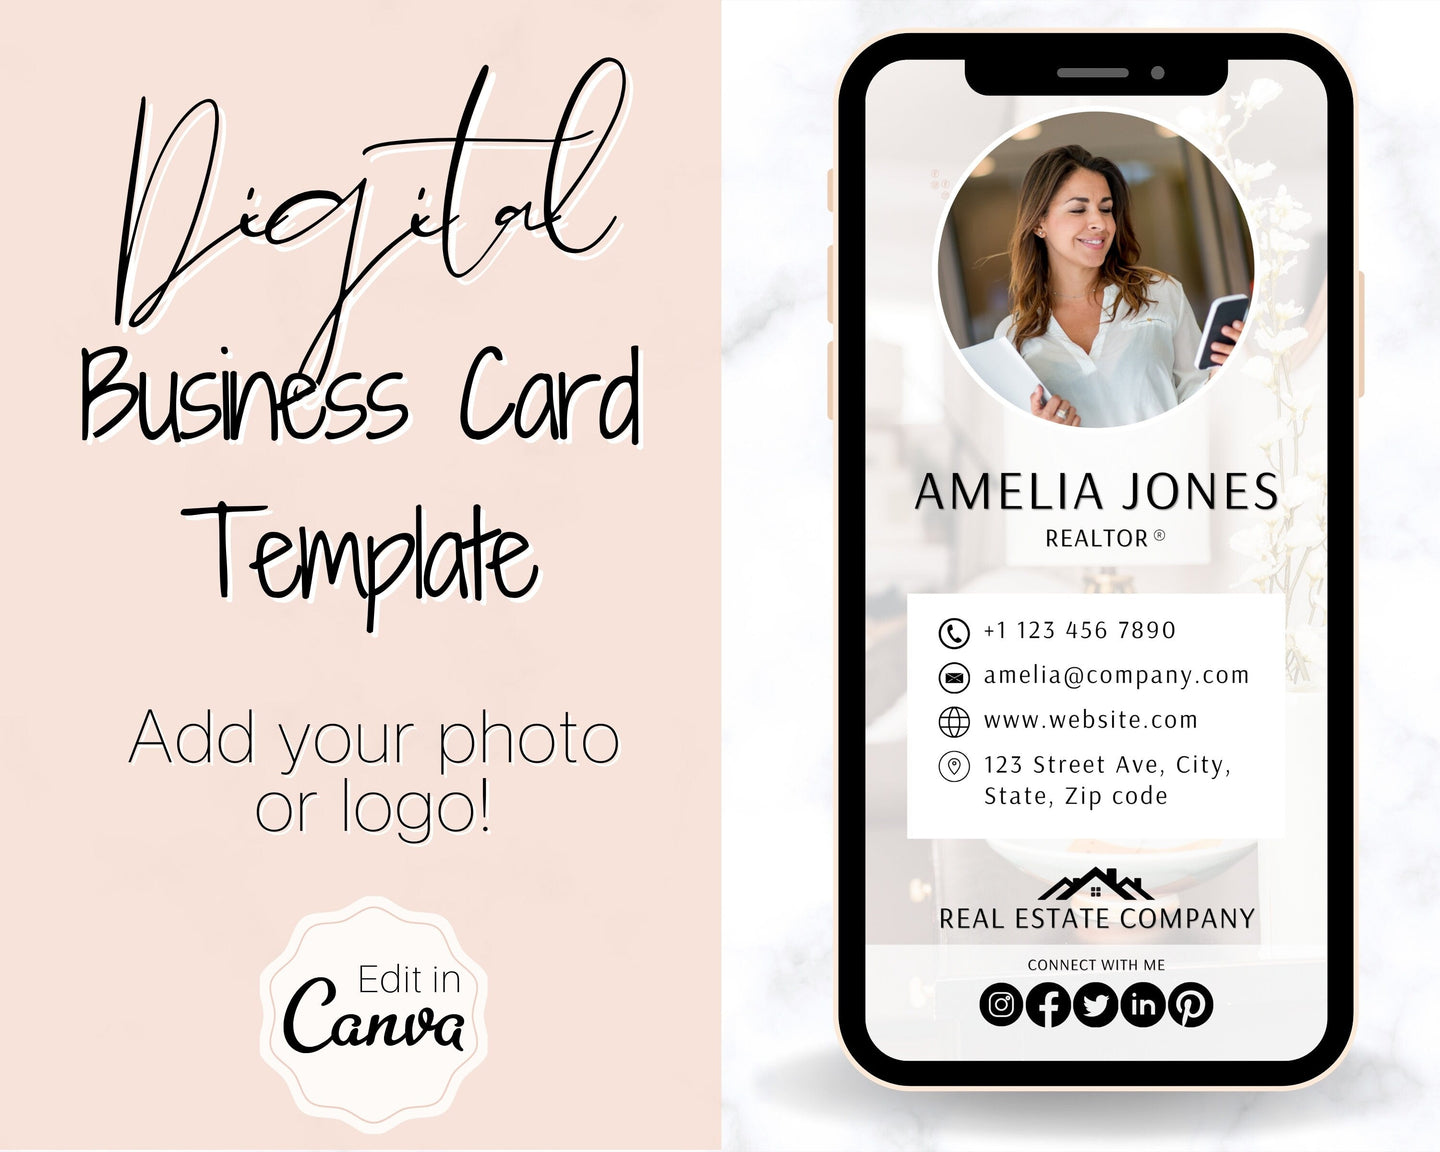 Digital Business Card Template. DIY add logo & photo! Editable Canva Design. Modern, Realtor Marketing, Real Estate, Realty Professional | Pink Style 8